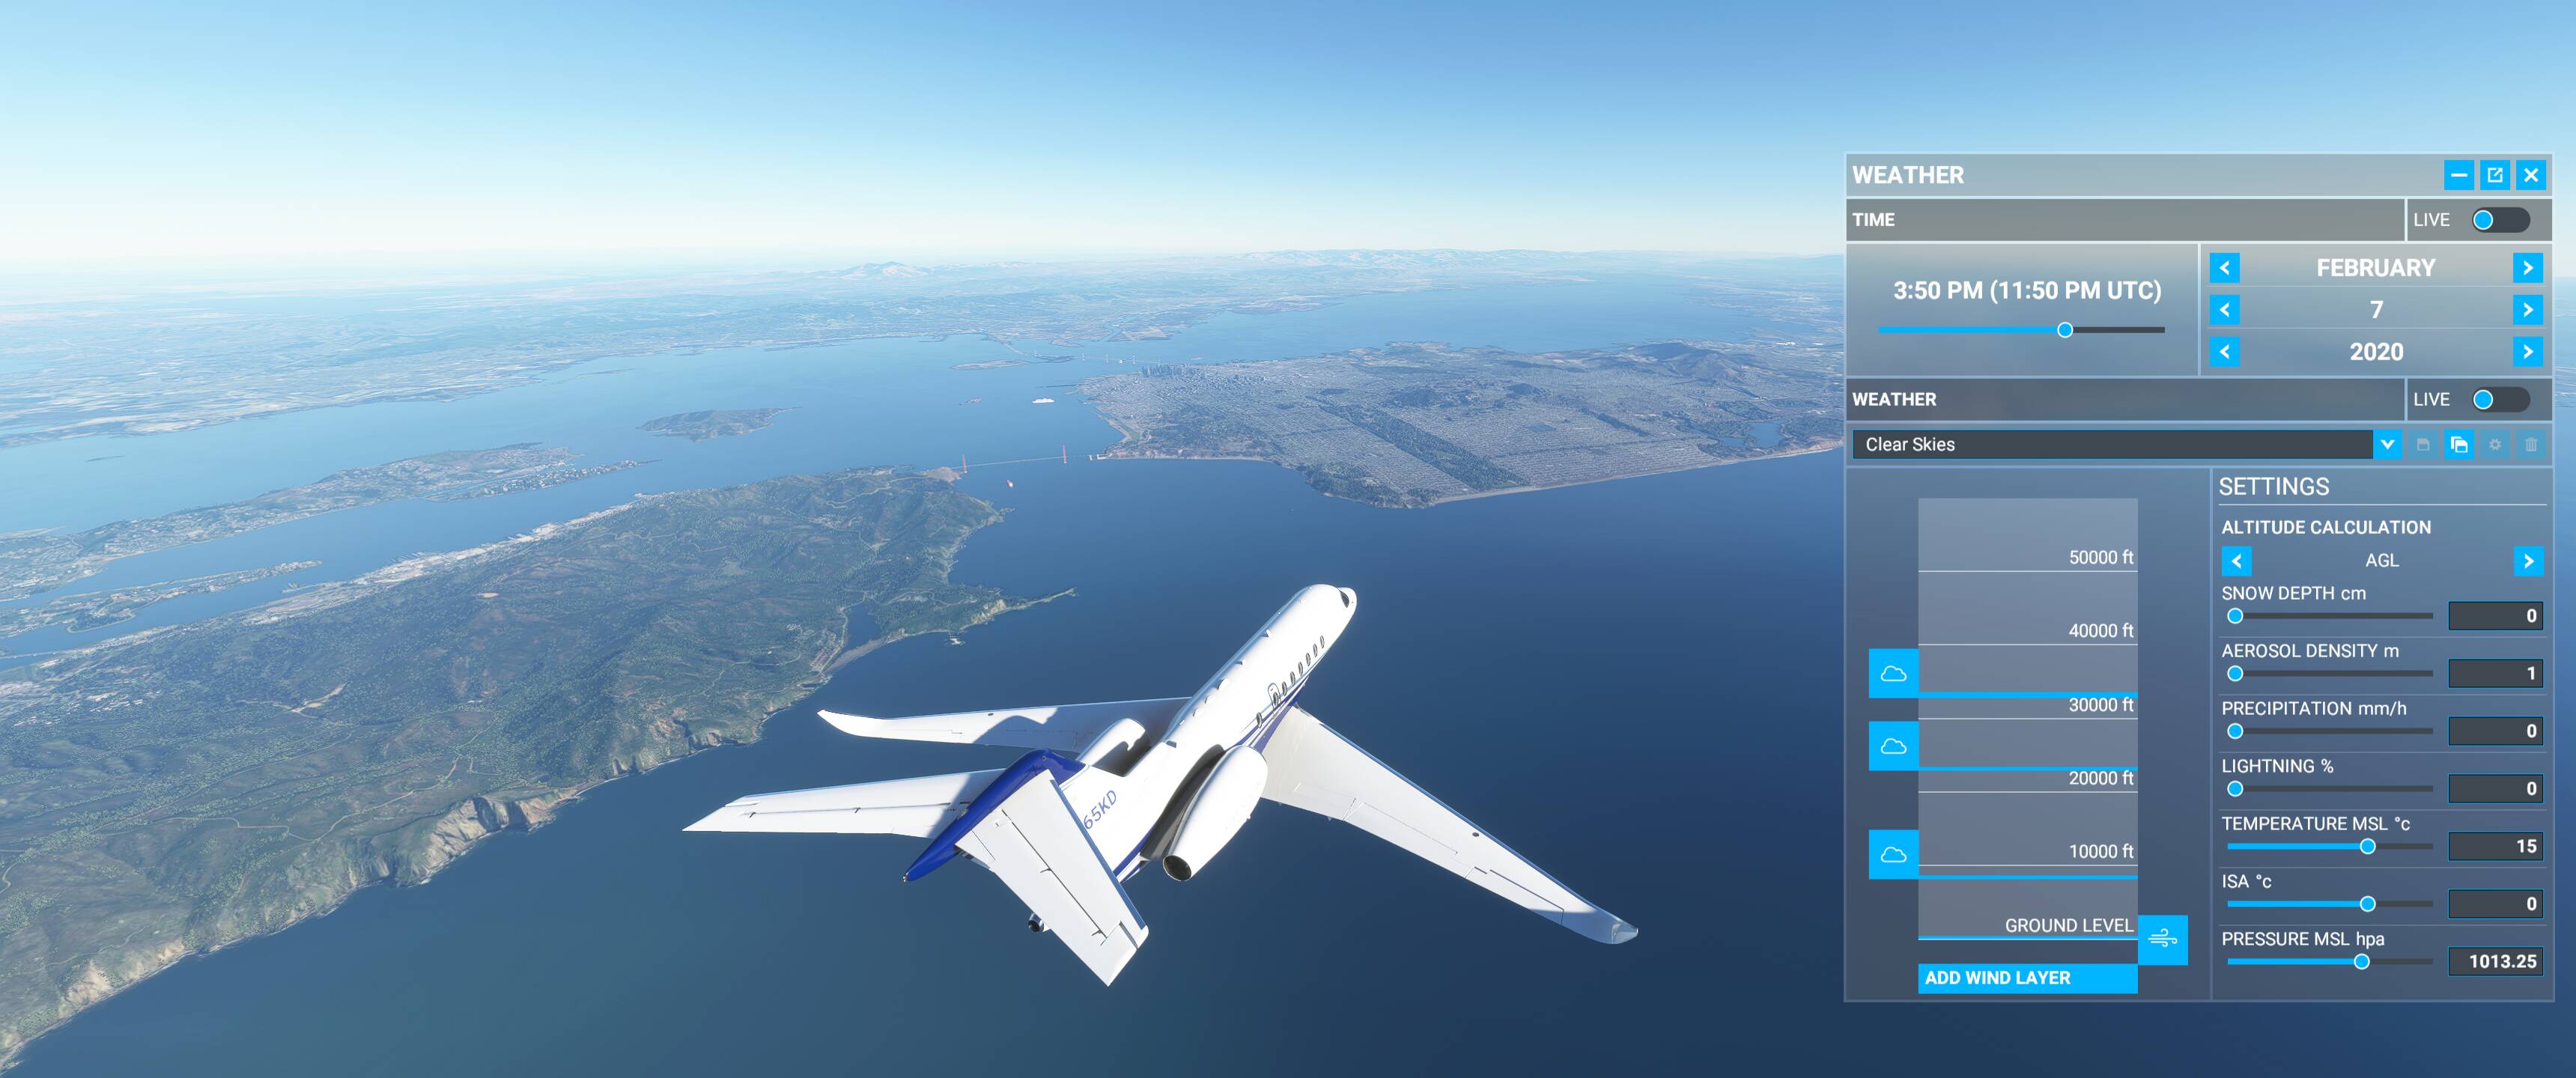 The world is too blue at high altitudes - Wishlist - Microsoft Flight  Simulator Forums